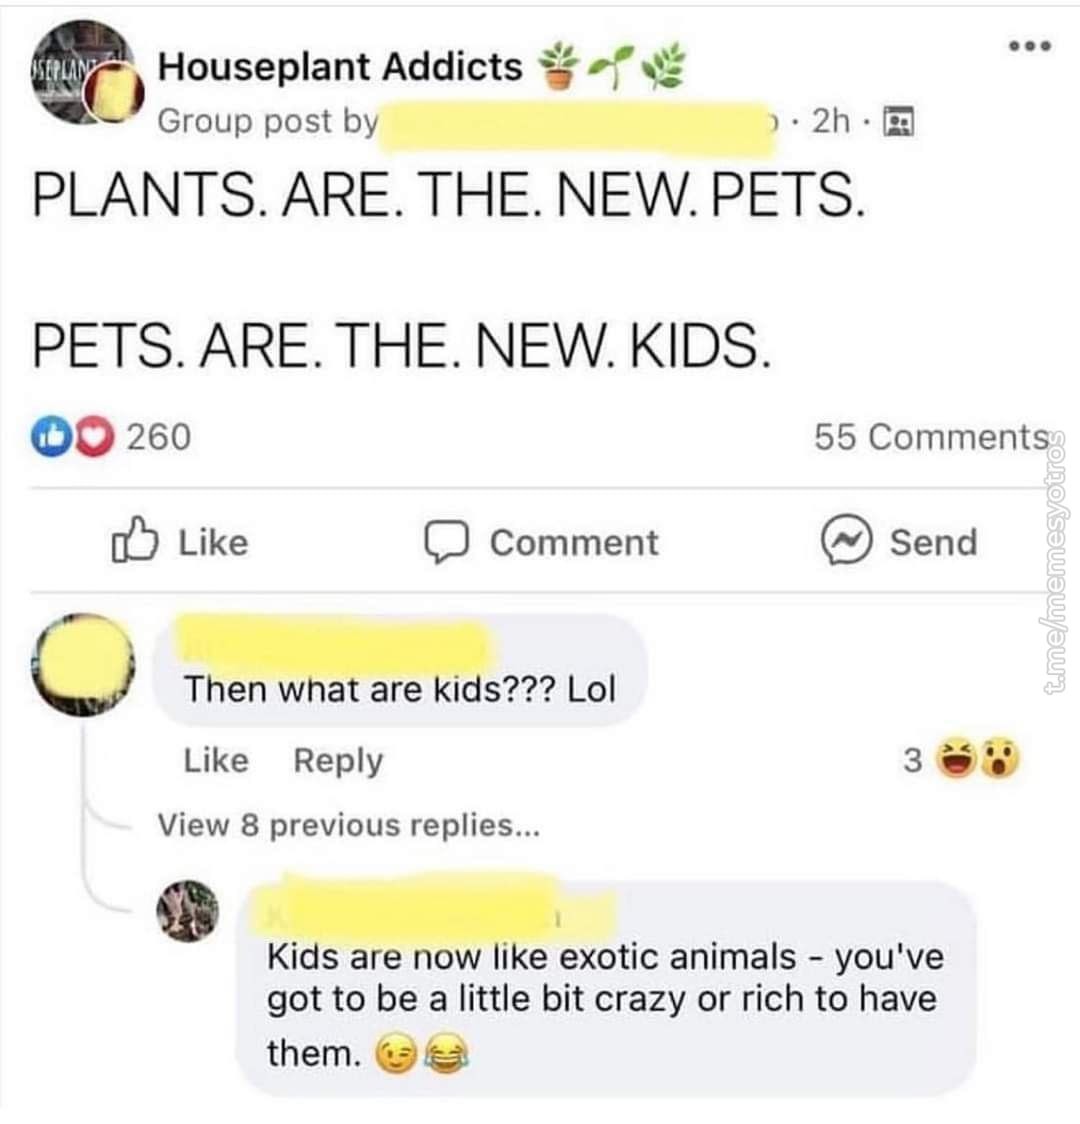 Las plantas son las nuevas mascotas xd - meme